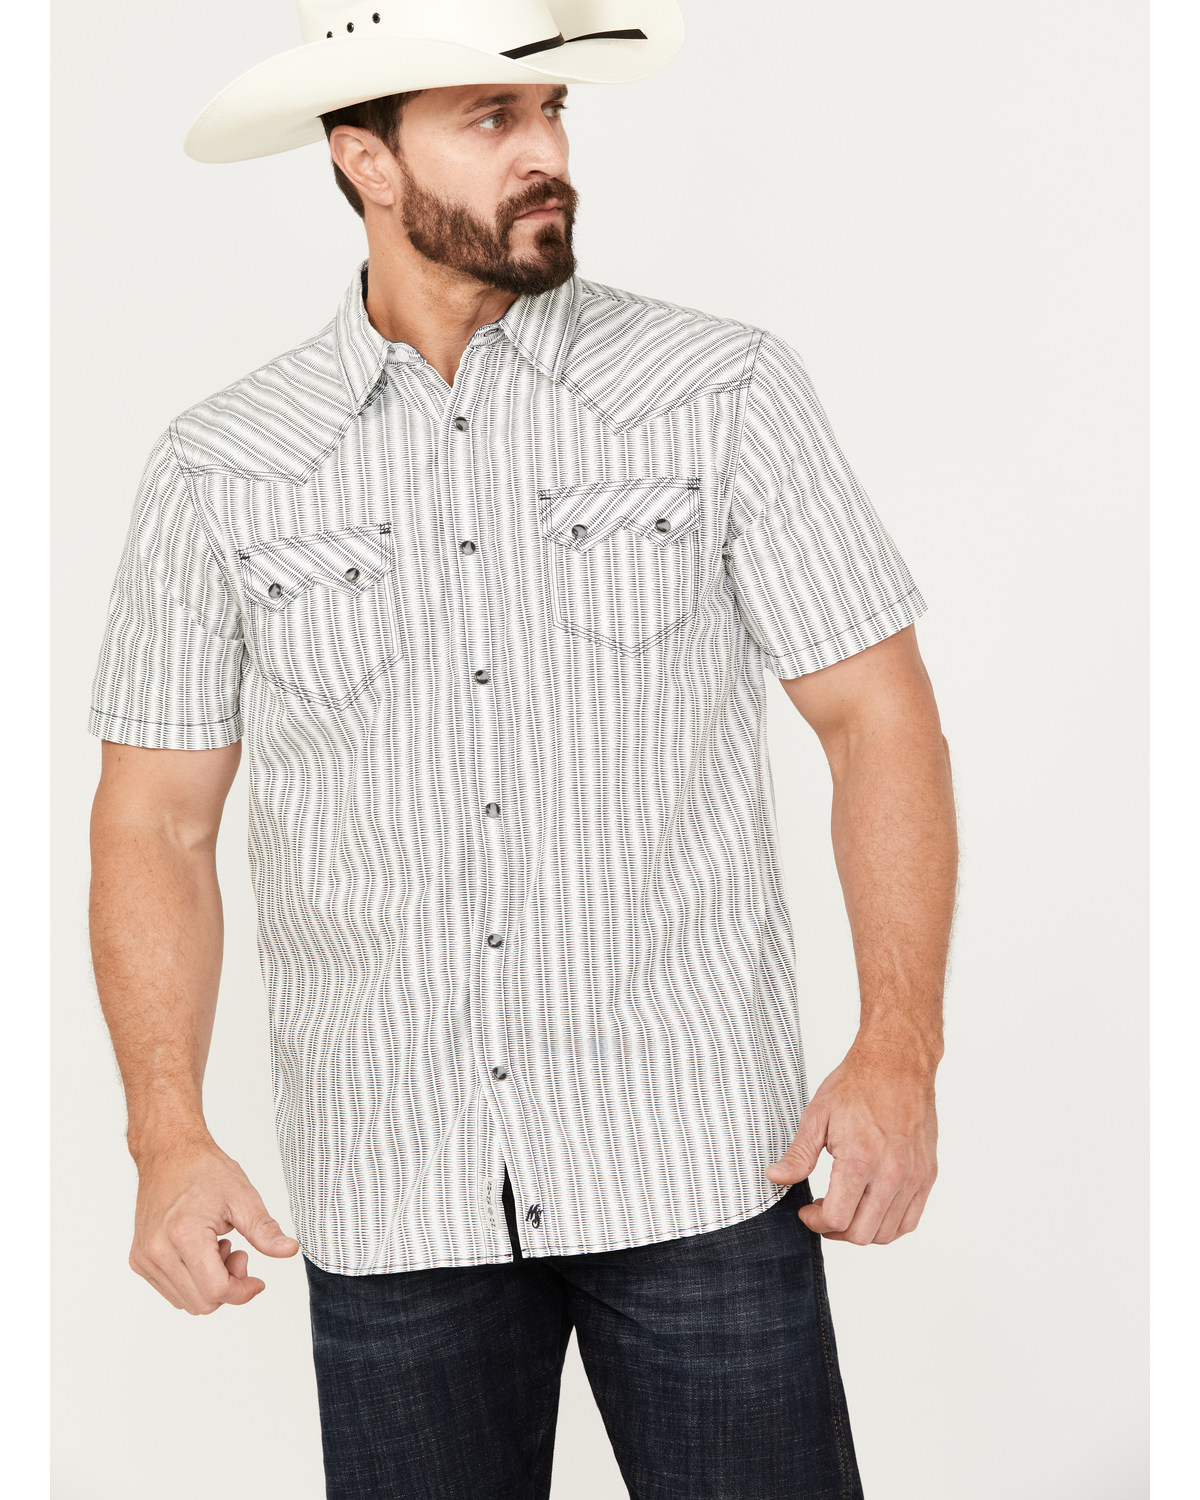 Moonshine Spirit Men's Striped Short Sleeve Western Snap Shirt